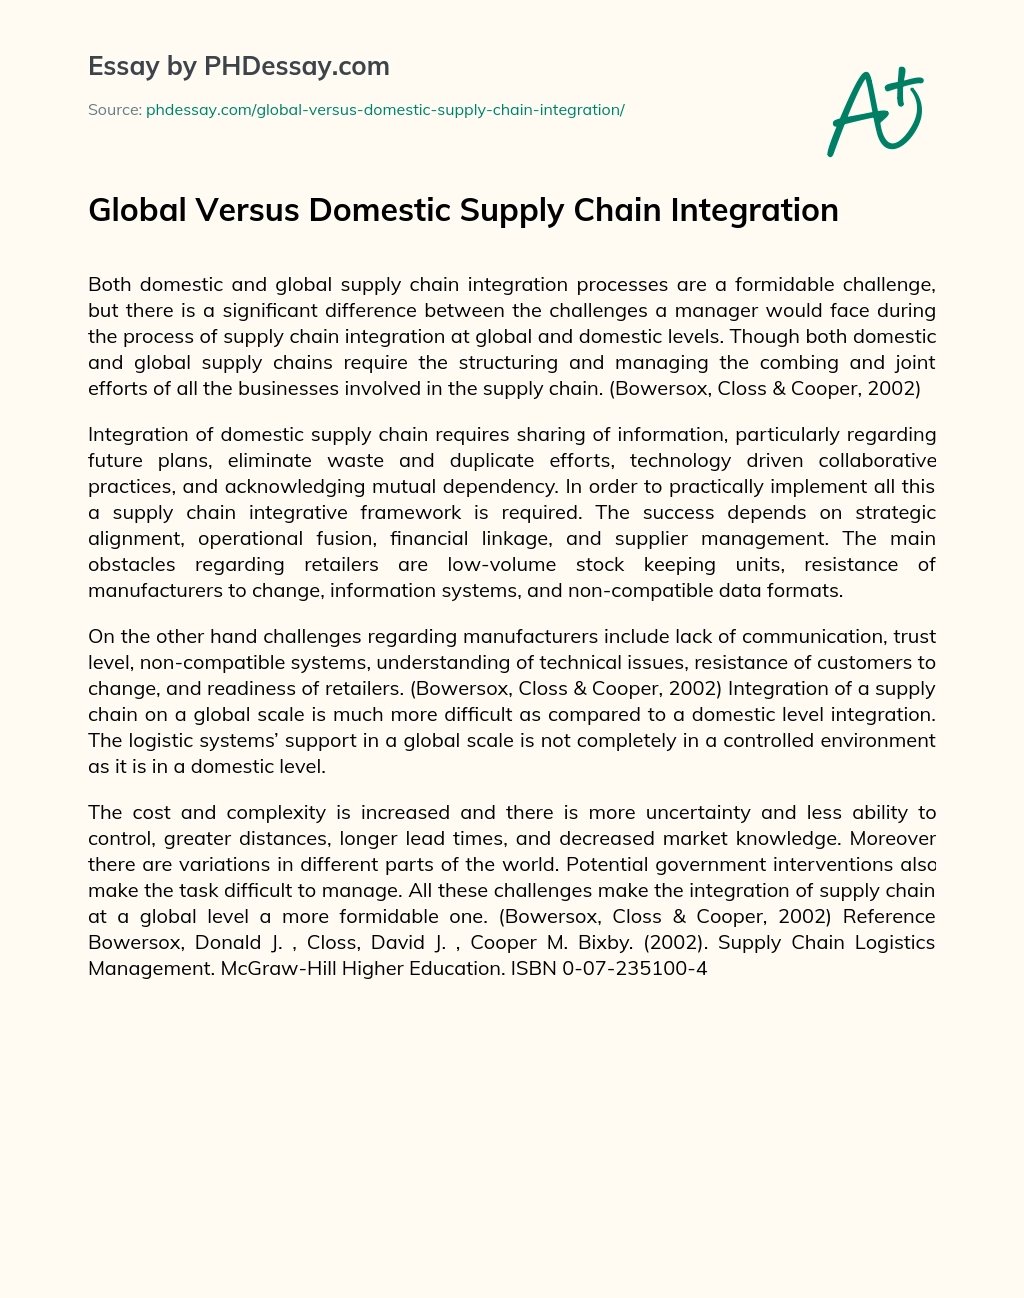 Global Versus Domestic Supply Chain Integration essay